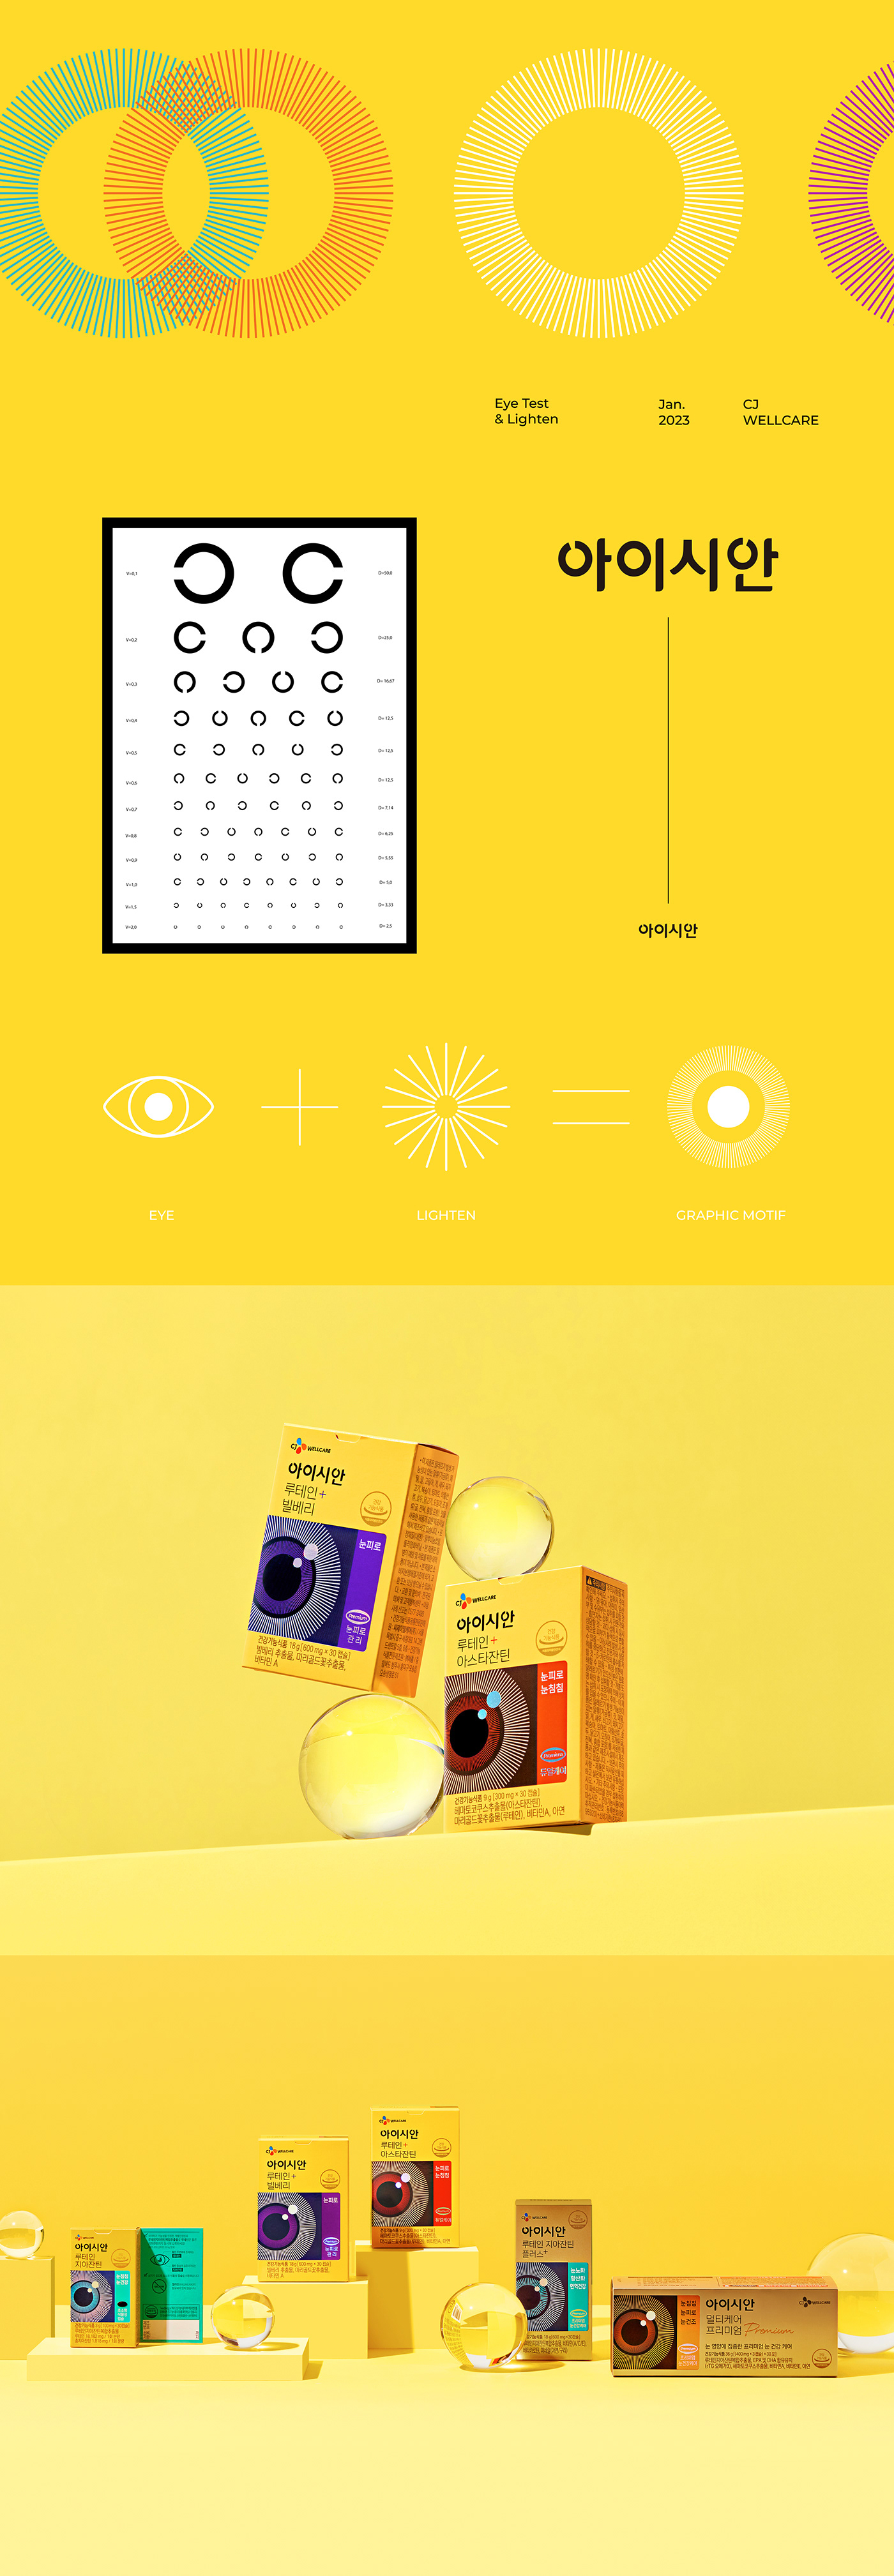 eyes Packaging packaging design 𝑮𝒓𝒂𝒑𝒉𝒊𝒄 𝒅𝒆𝒔𝒊𝒈𝒏 graphic